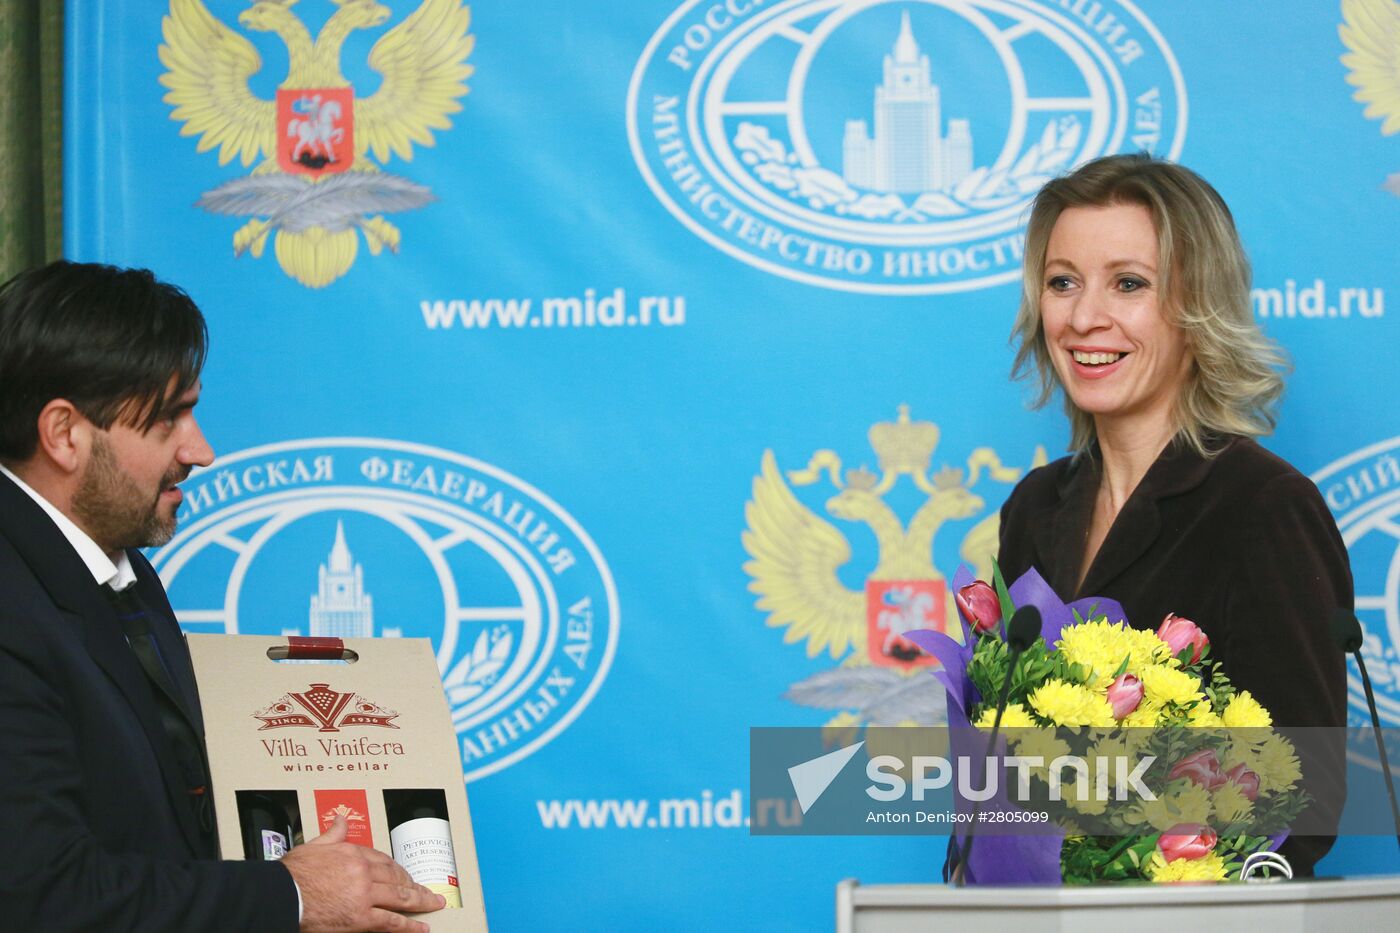 Briefing by Russian Foreign Minsitry Spokesperson Zakharova